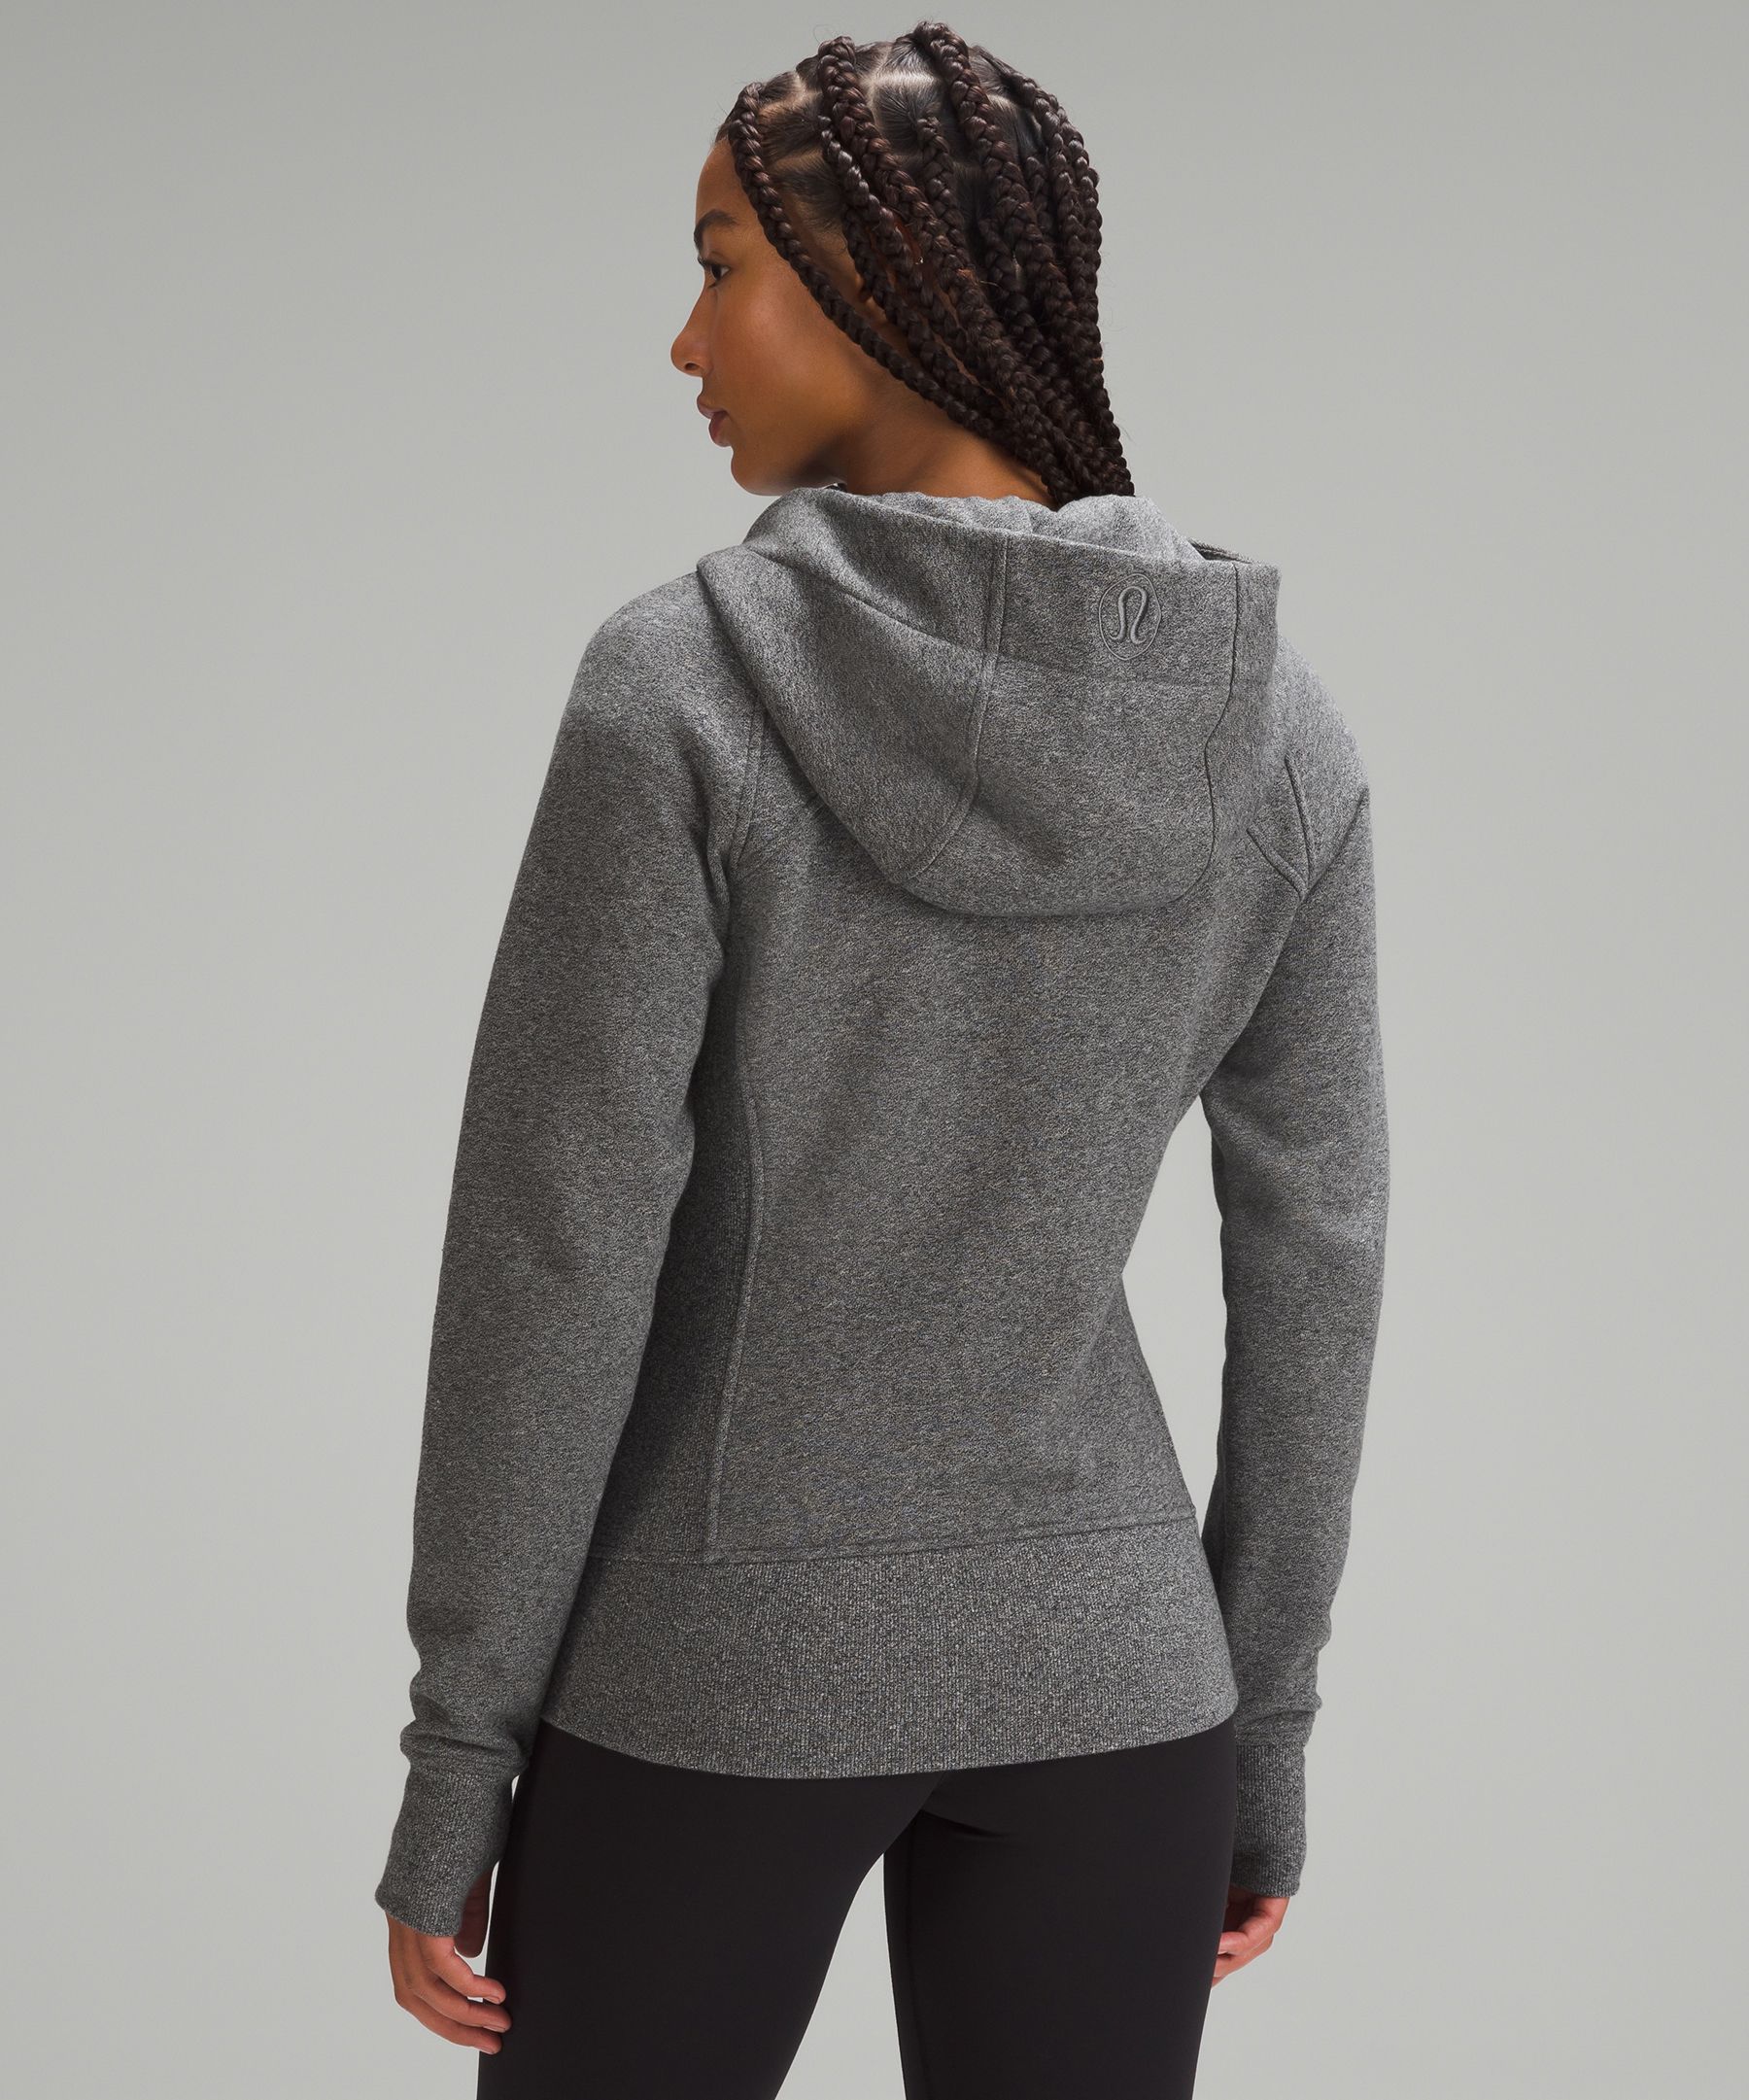 Scuba Full-Zip Hoodie | Women's Hoodies & Sweatshirts | lululemon